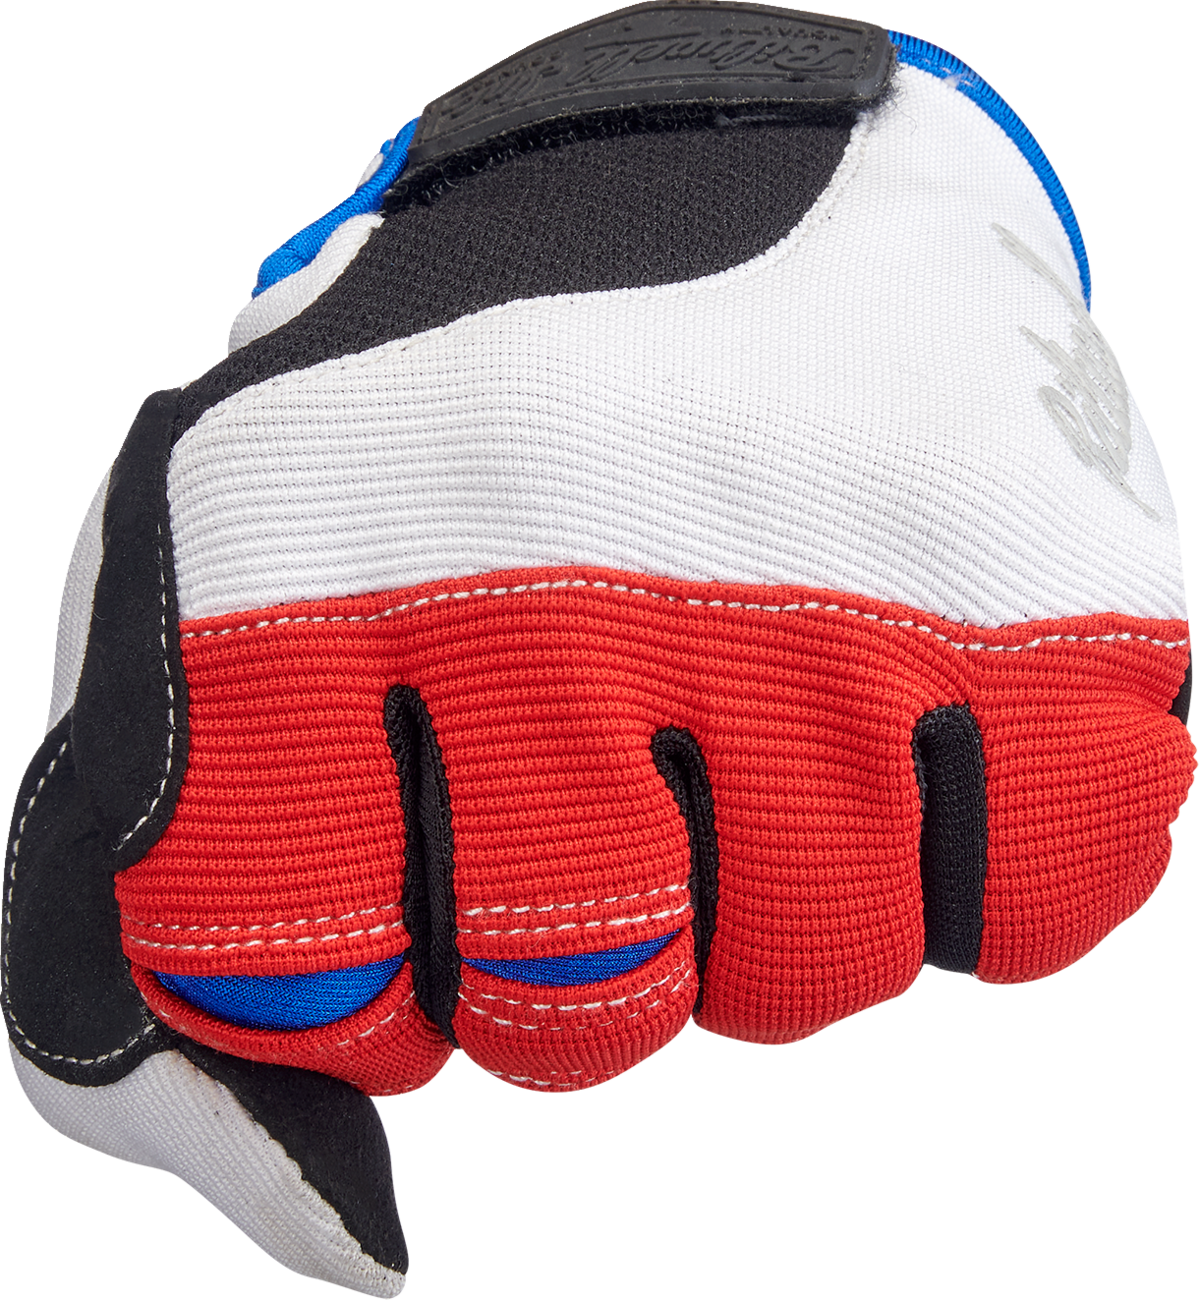 BILTWELL Moto Gloves - Red/White/Blue - Large 1501-1208-004